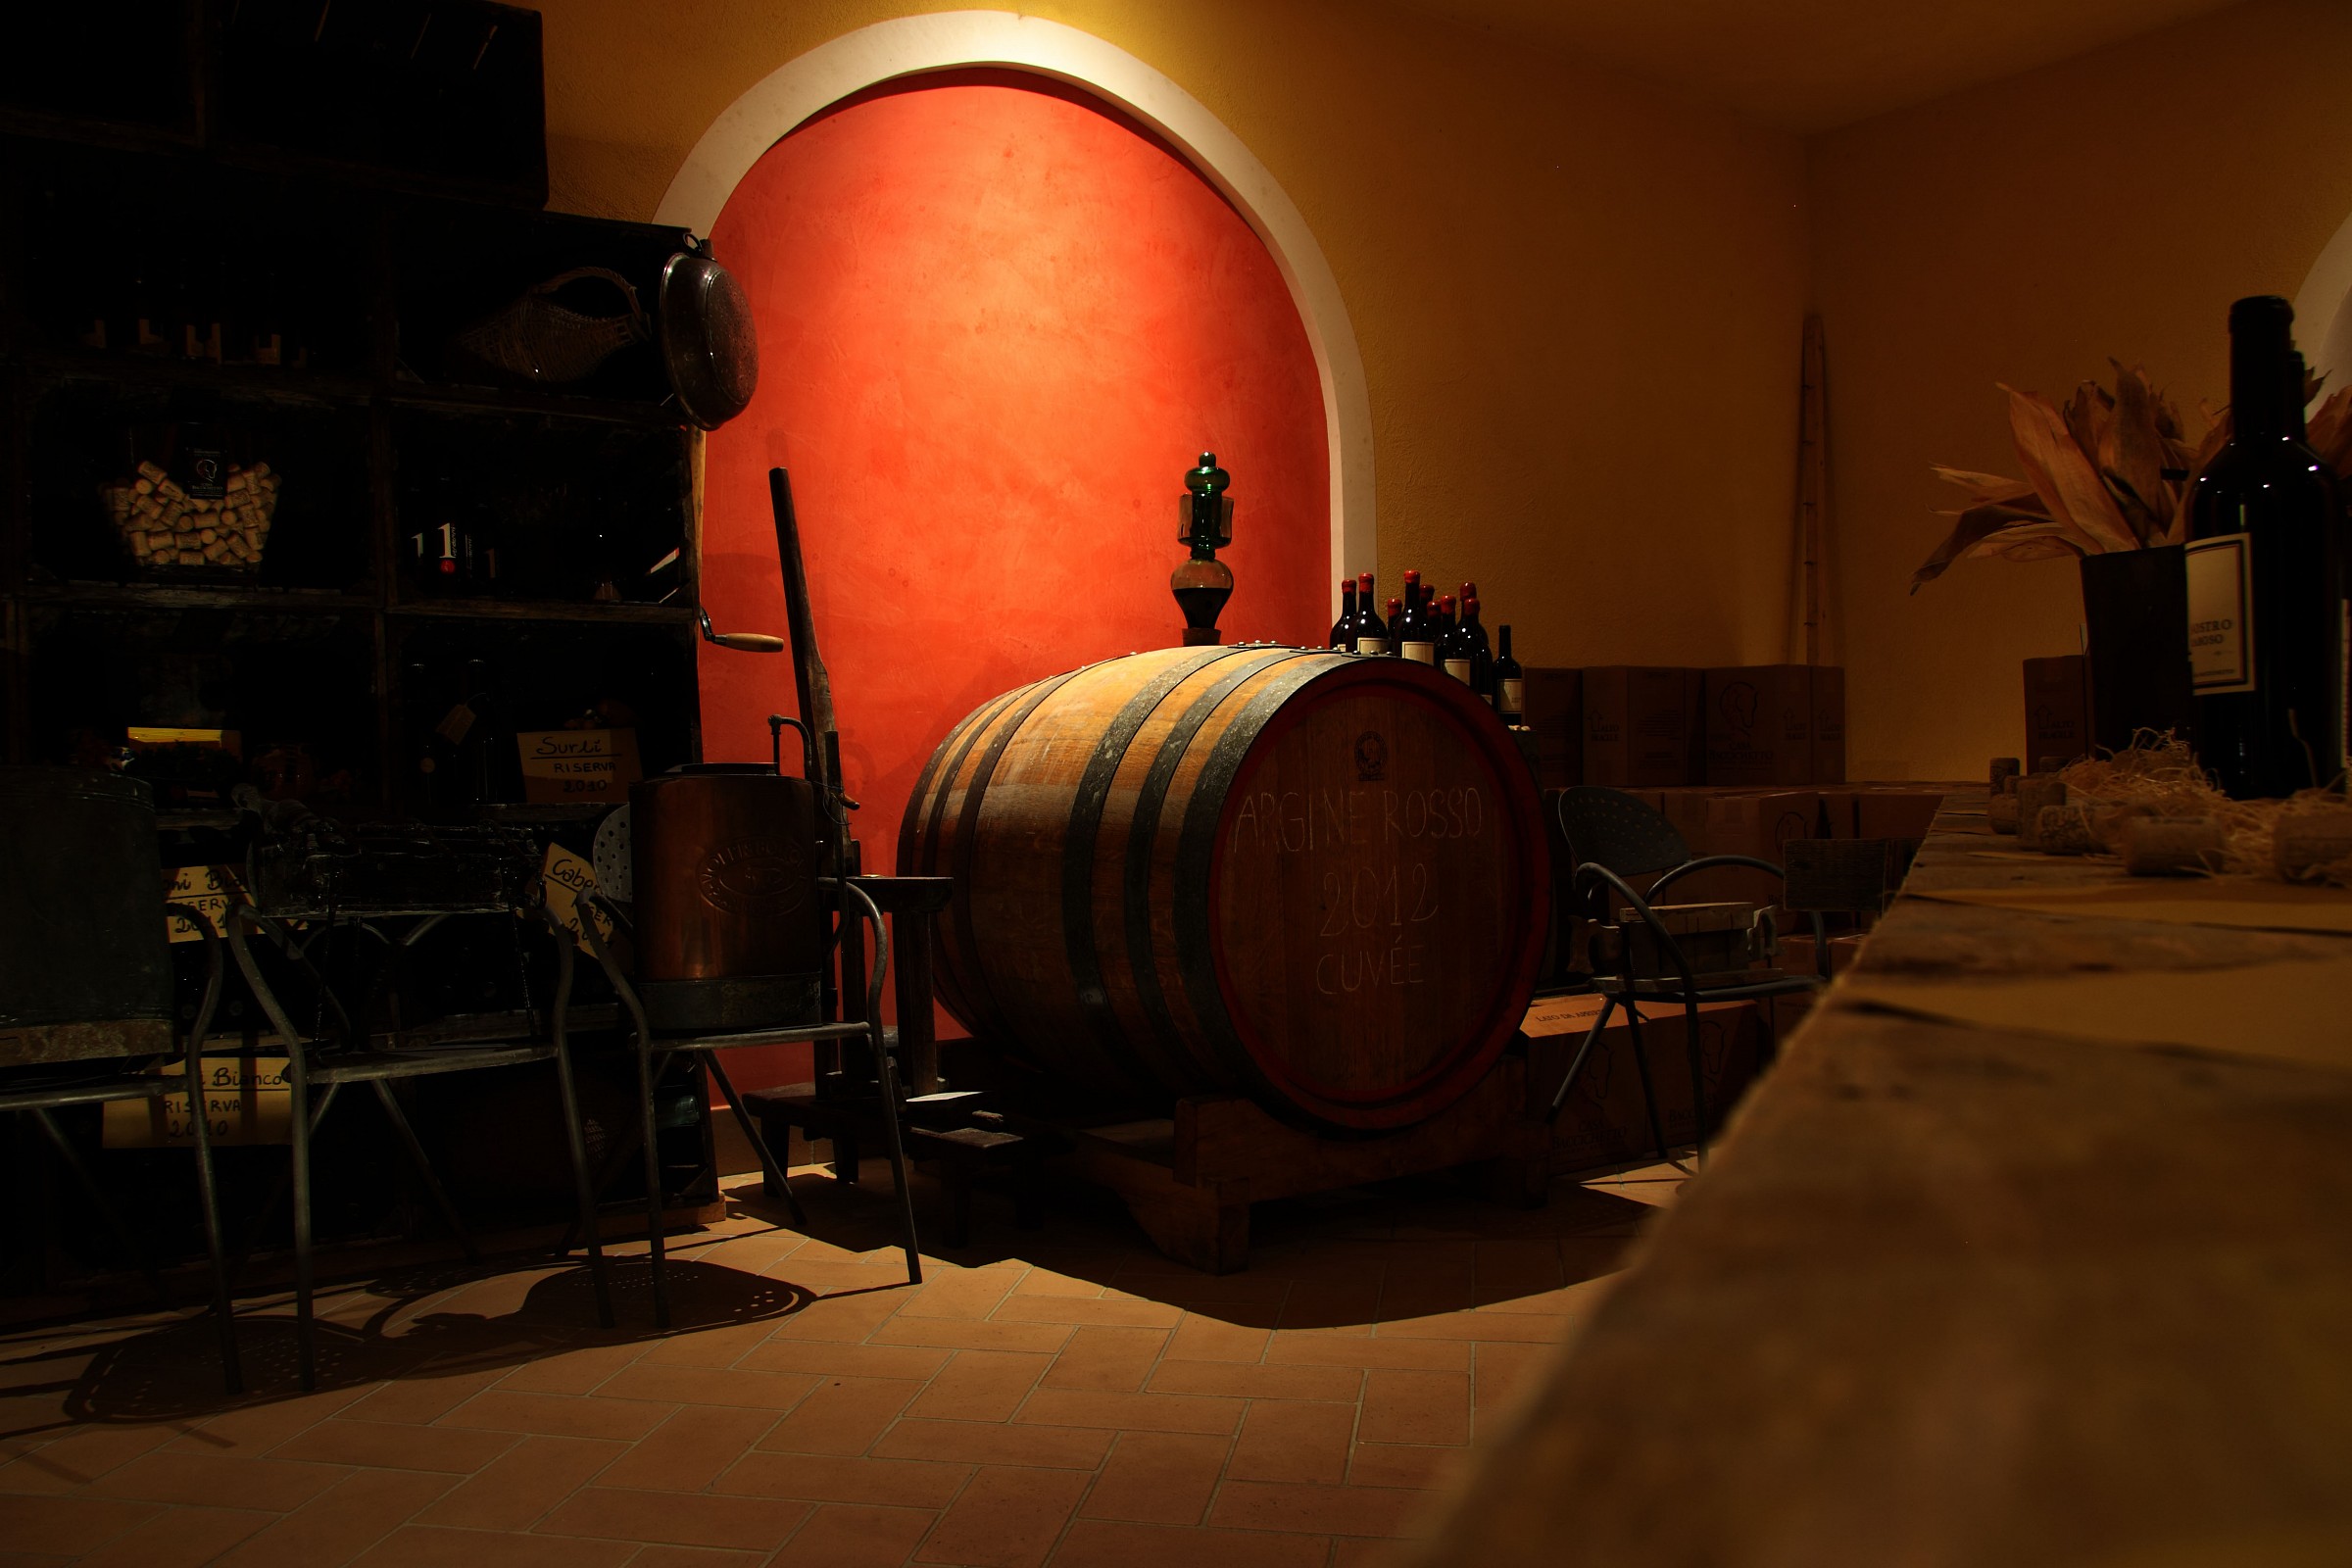 The wine cellar...